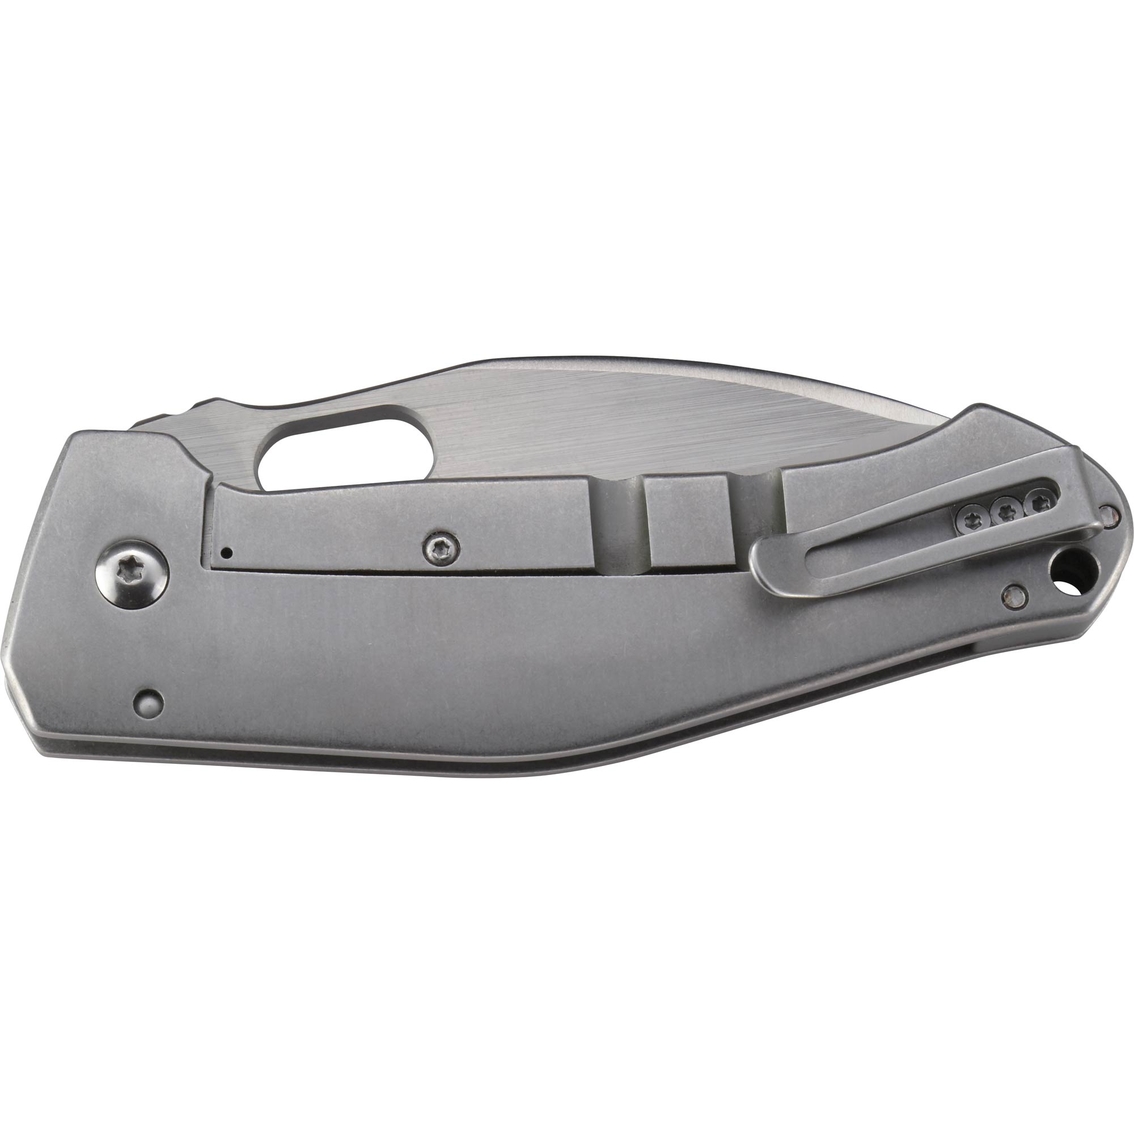 Columbia River Knife & Tool 2460 Stainless Steel Buku Clip Folder Knife - Image 3 of 4